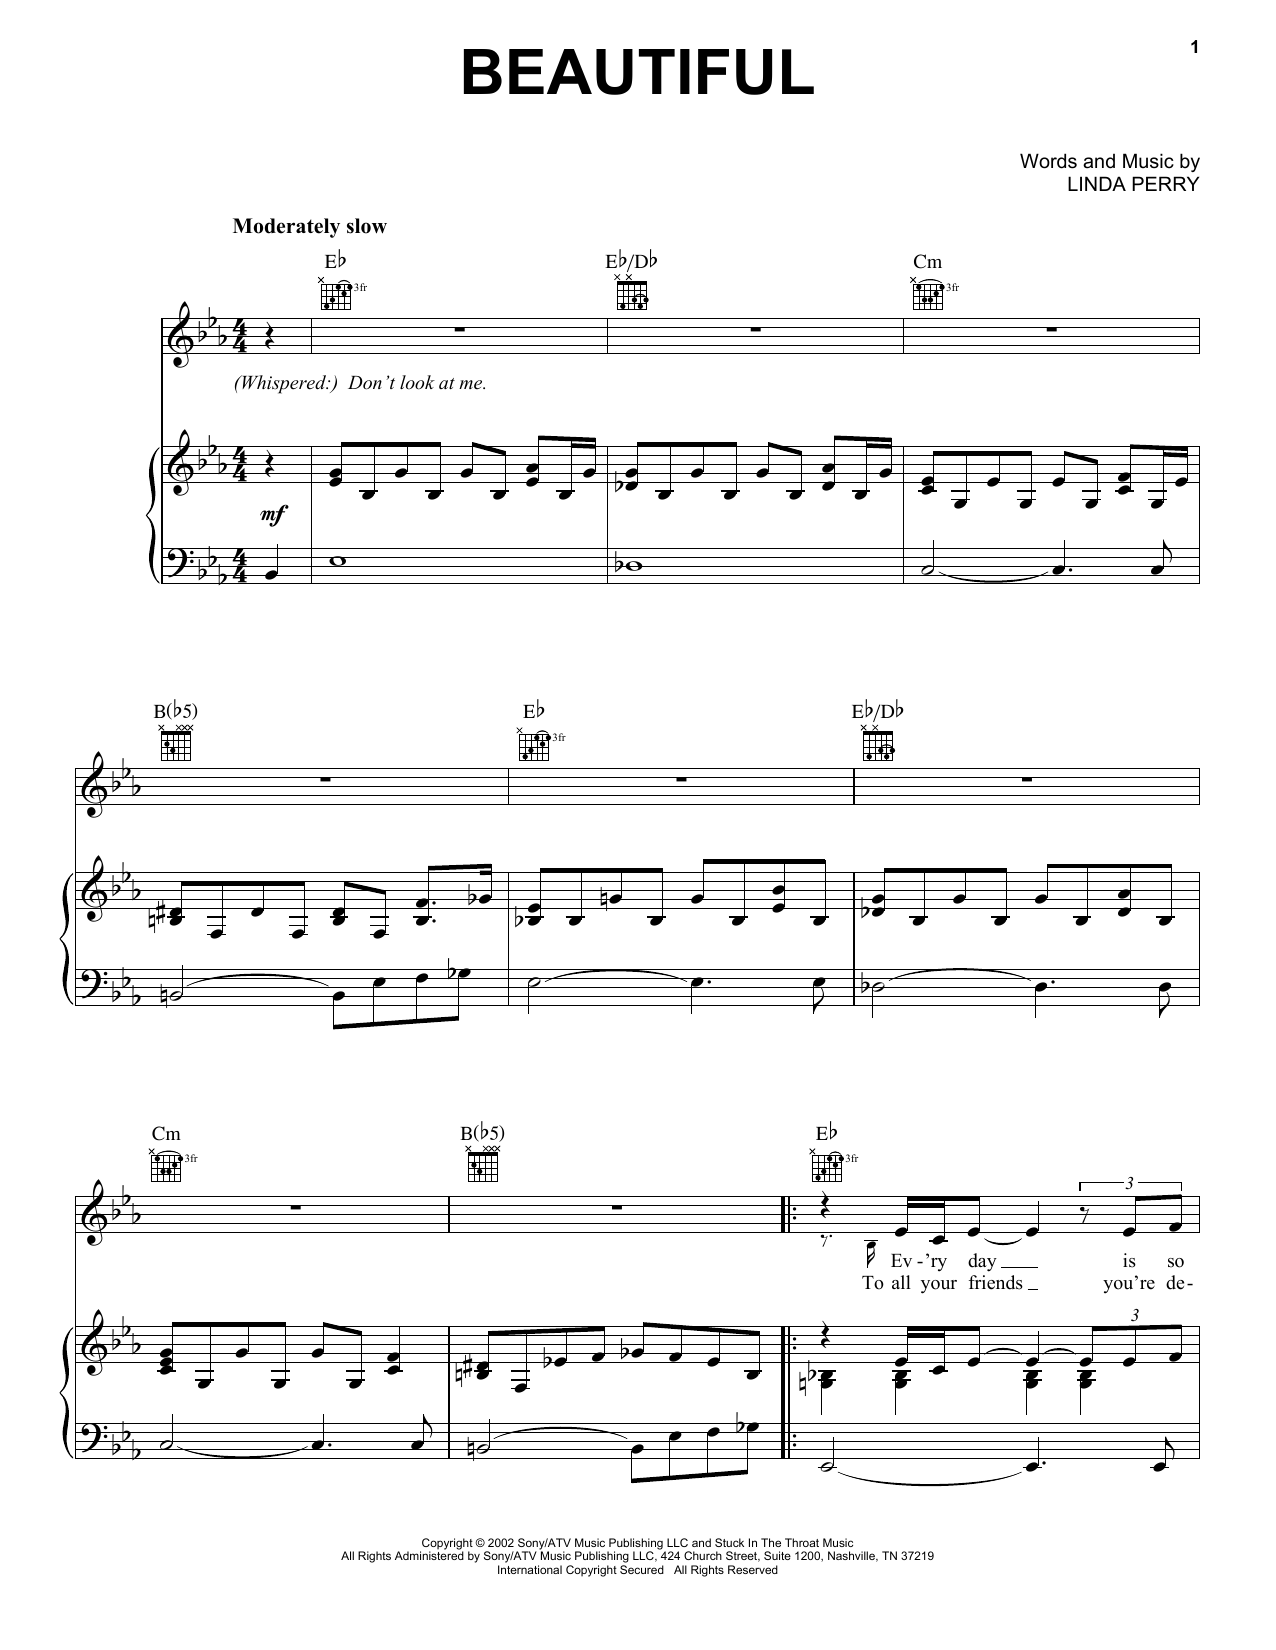 Christina Aguilera Beautiful Sheet Music Notes & Chords for Lyrics Only - Download or Print PDF